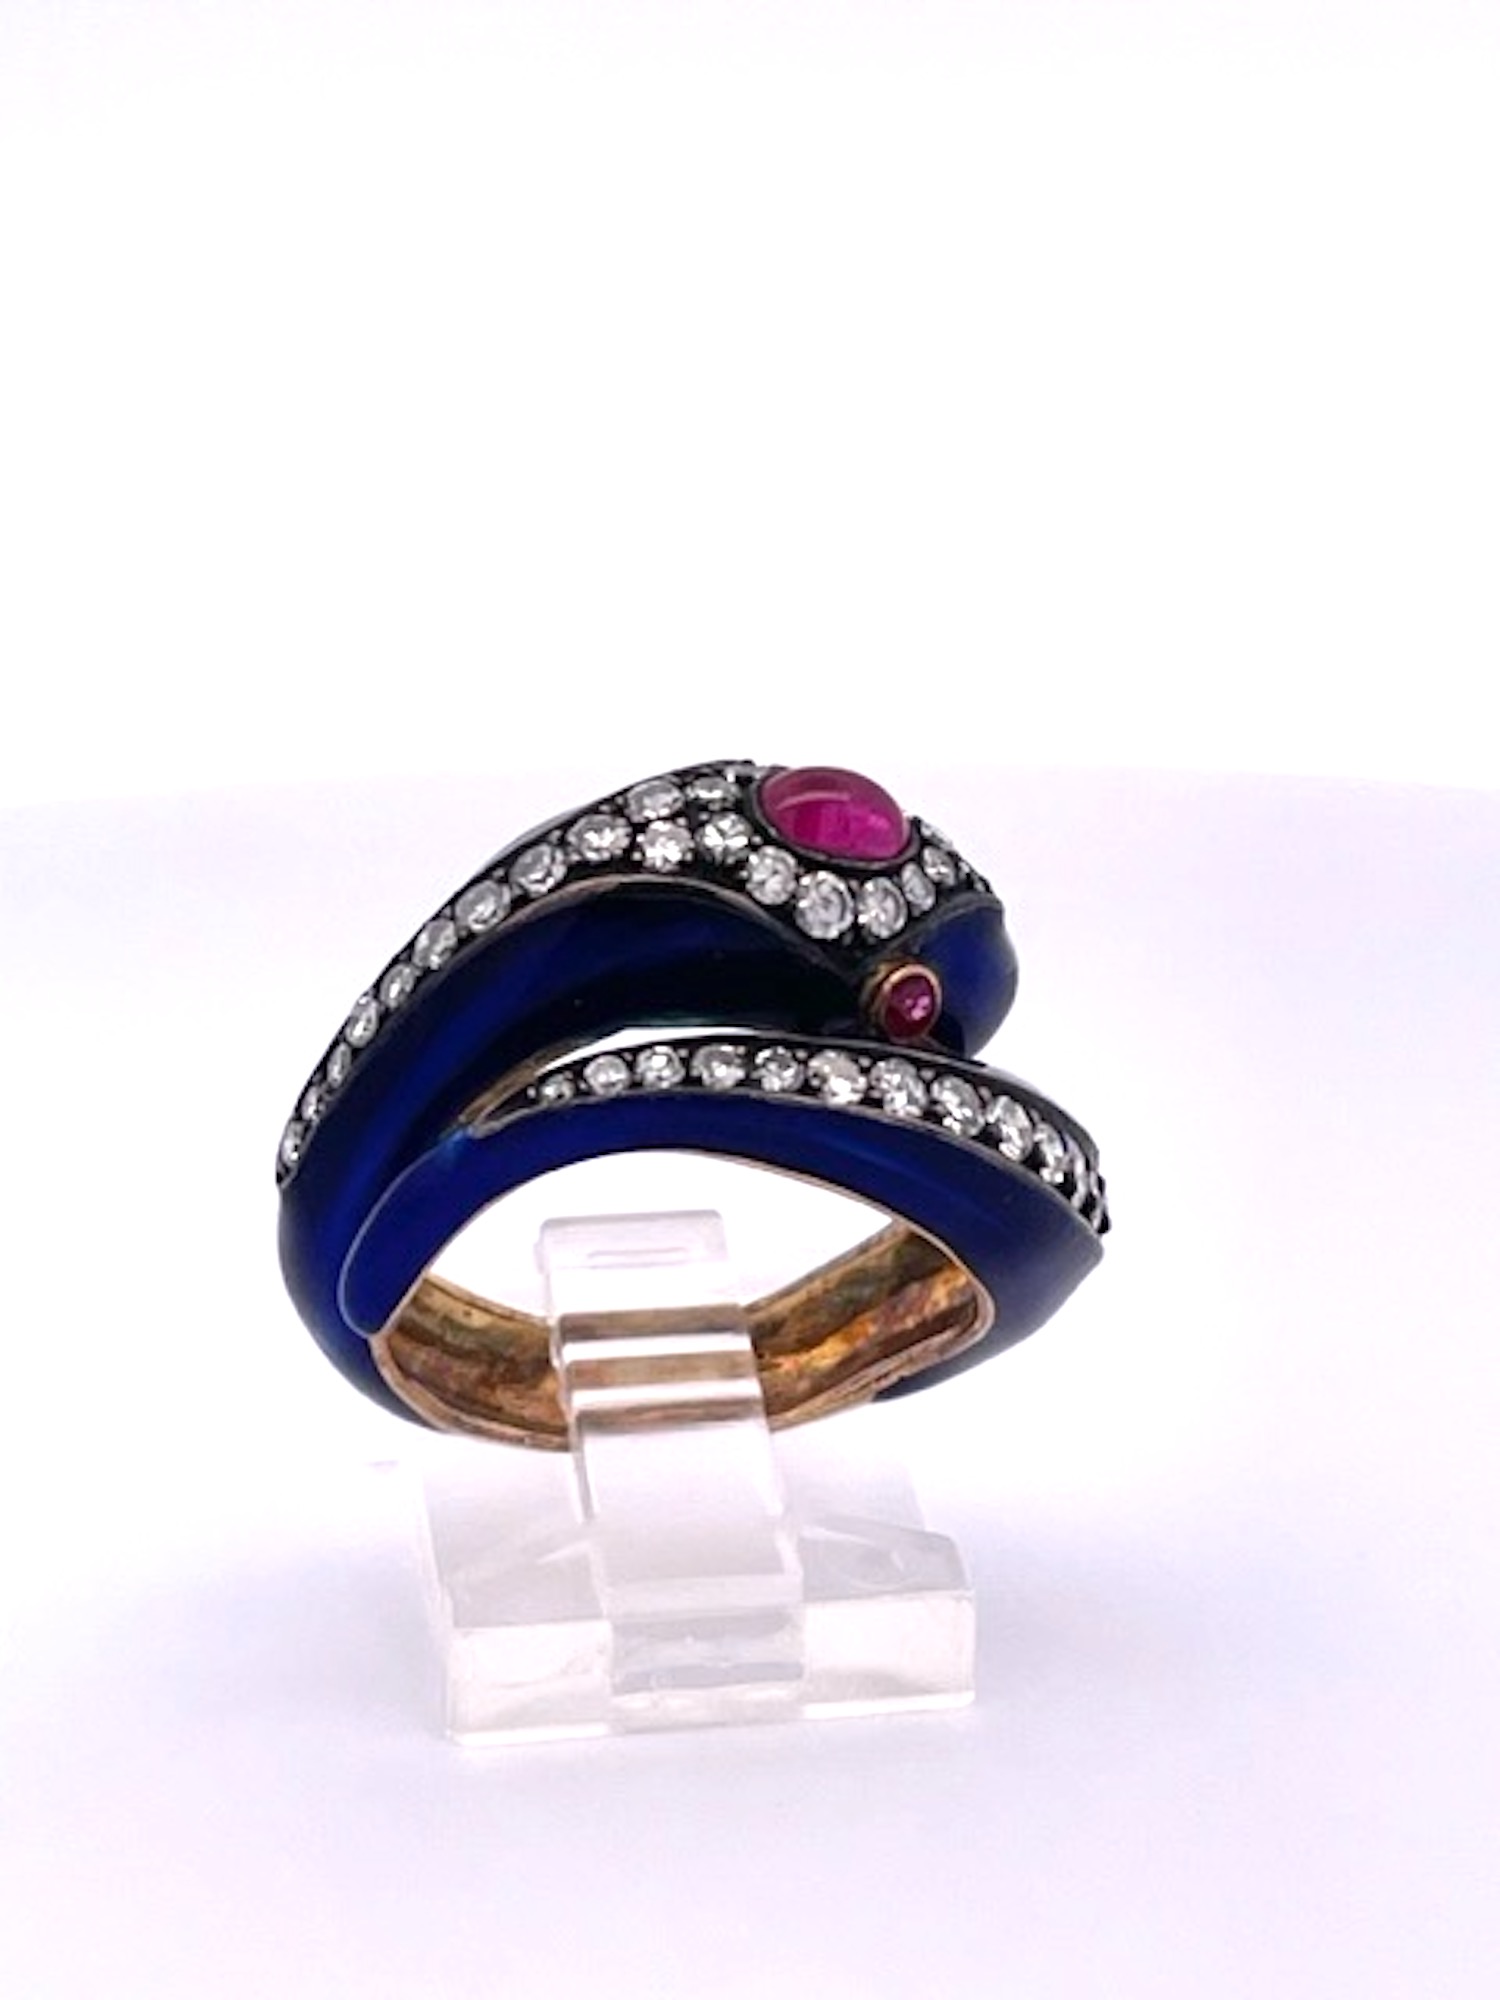 18K Snake Ring Cobalt Blue Rubies Diamonds